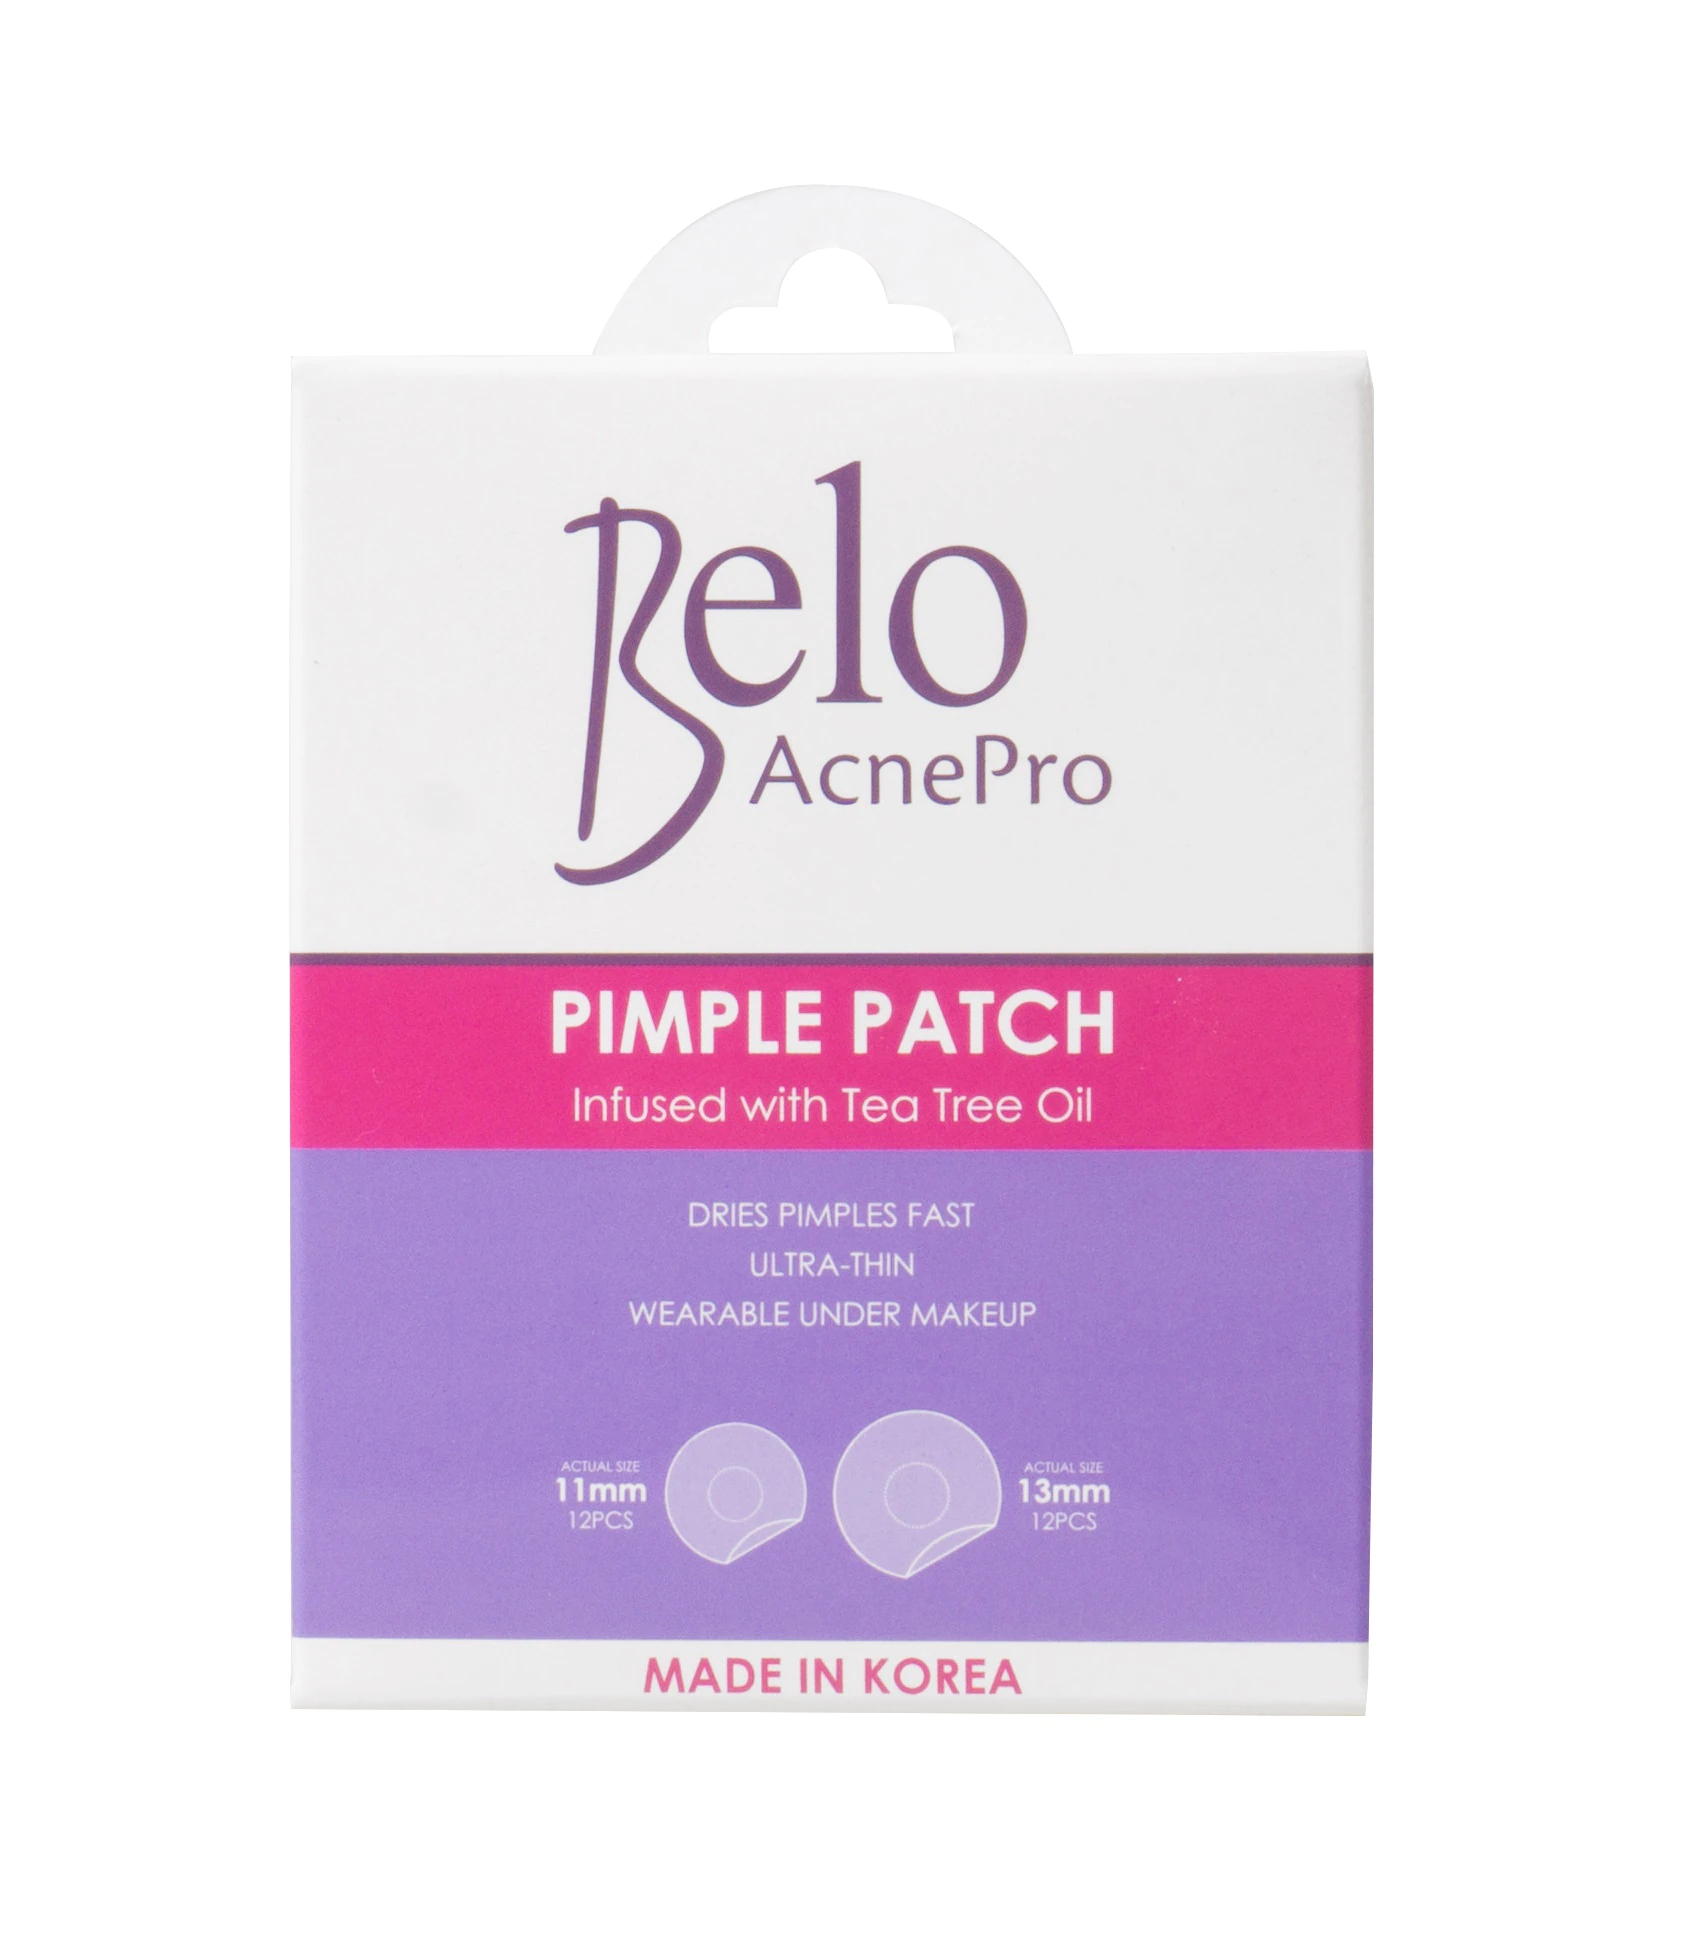 Belo AcnePro Pimple Patch_1